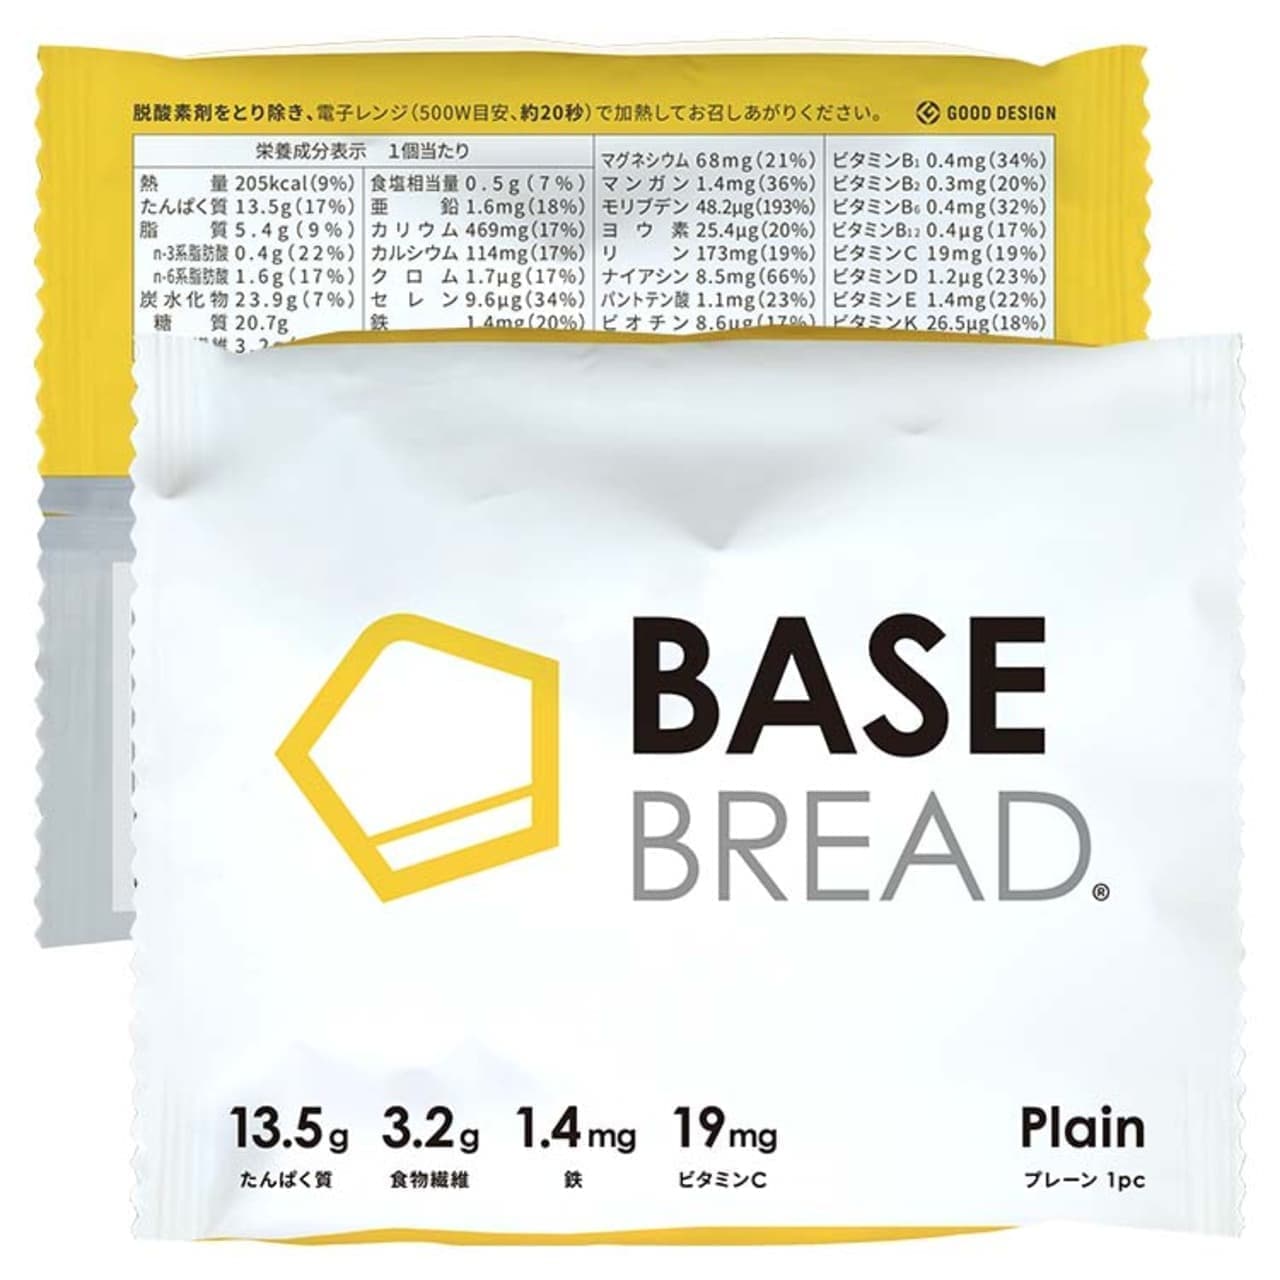 BASE FOOD "BASE BREAD Plain" package